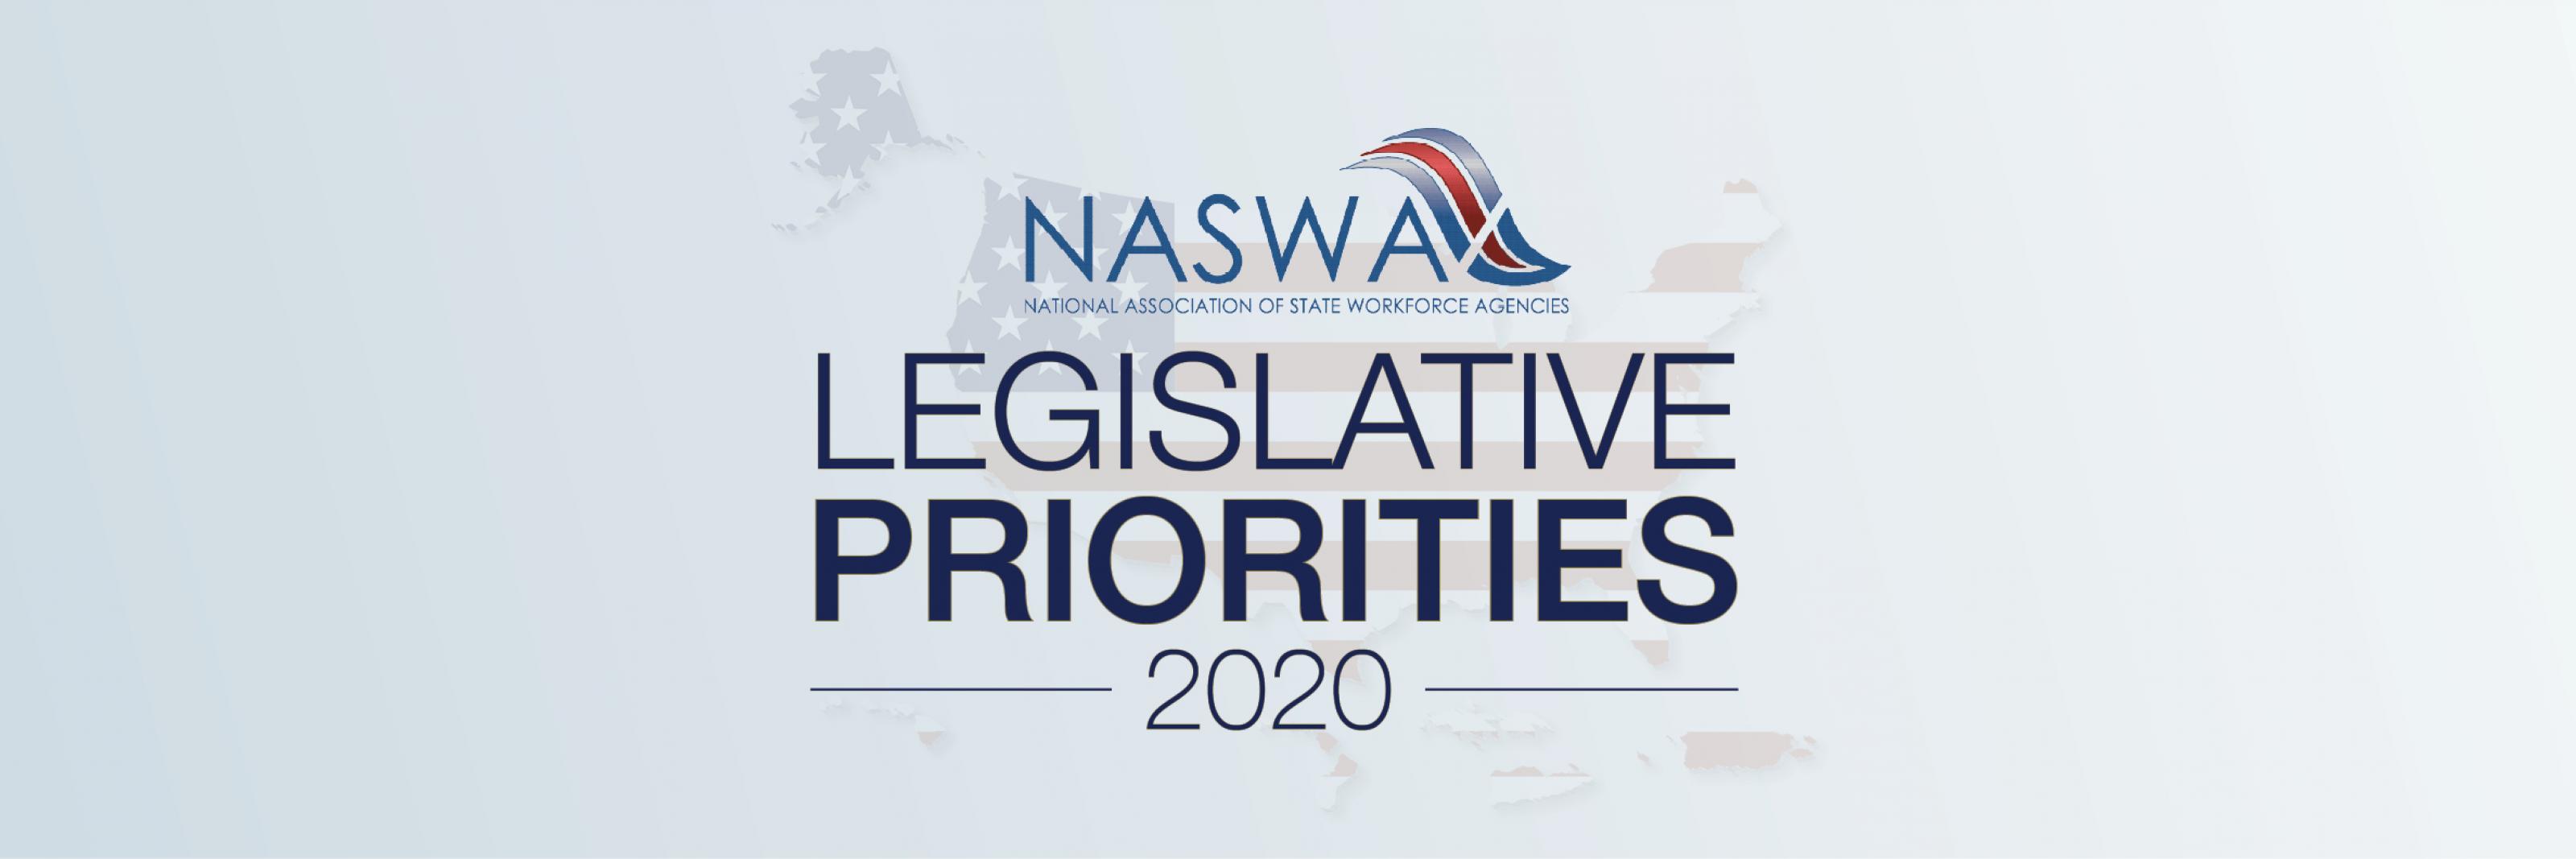 2020 Legislative Priorities Header